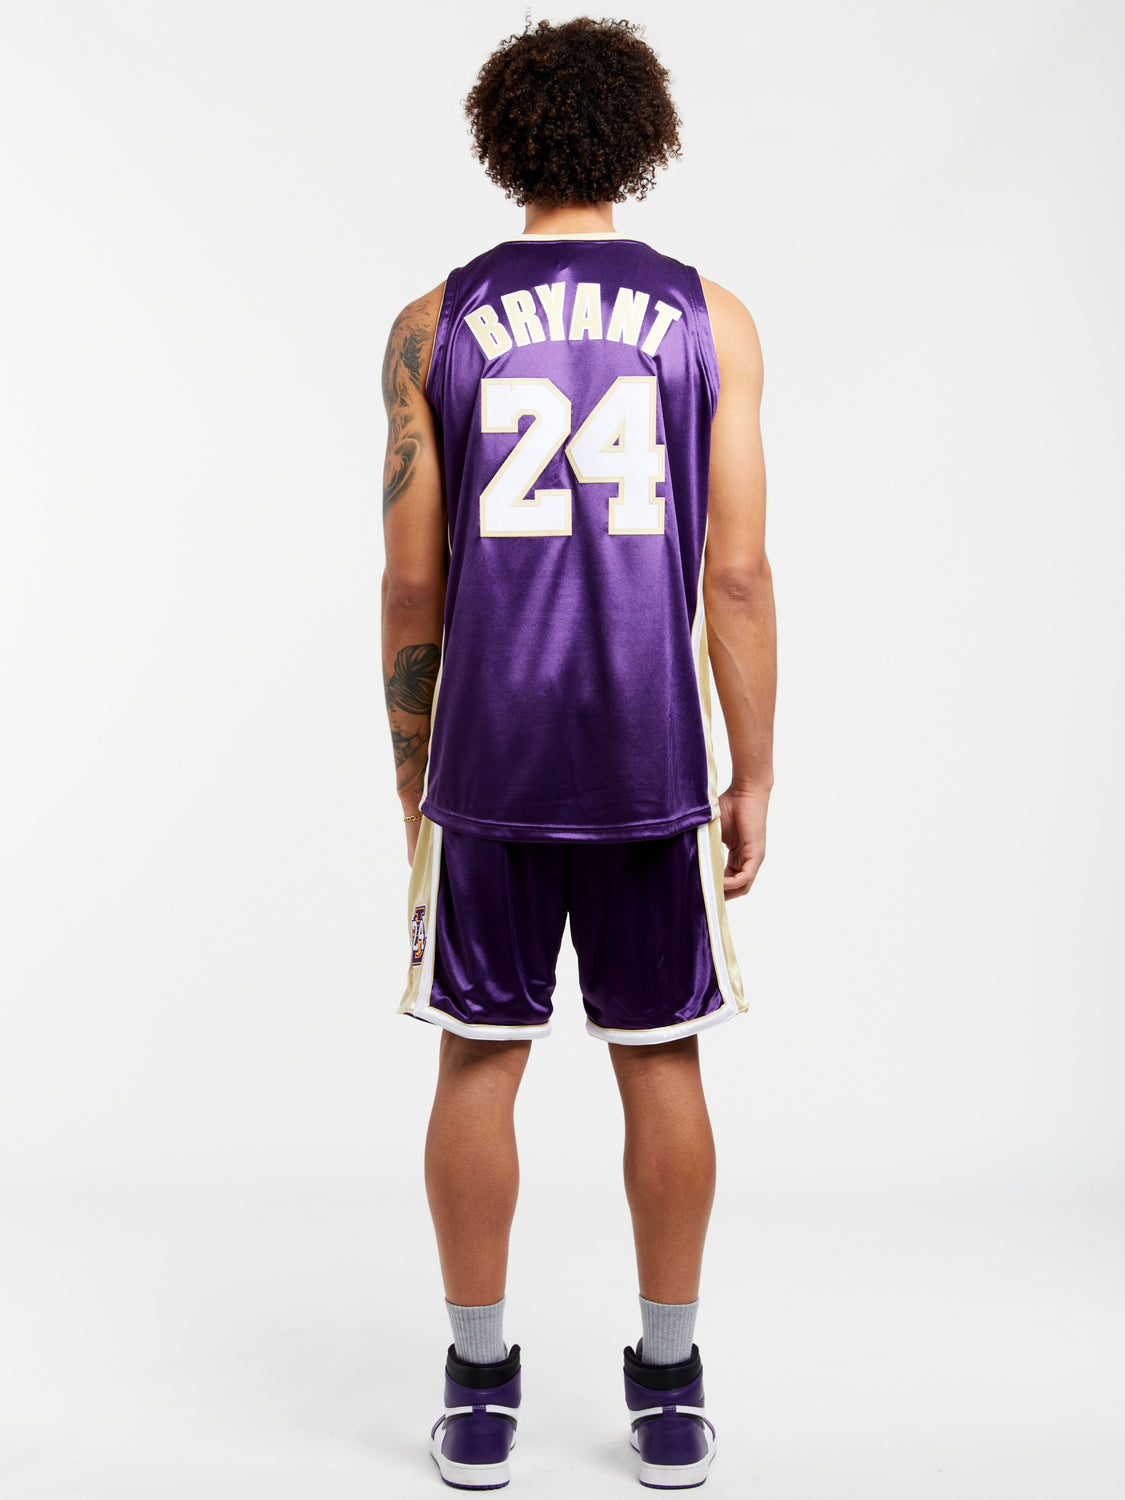 Kobe Bryant 2001/02 MPLS Authentic Jersey : r/basketballjerseys